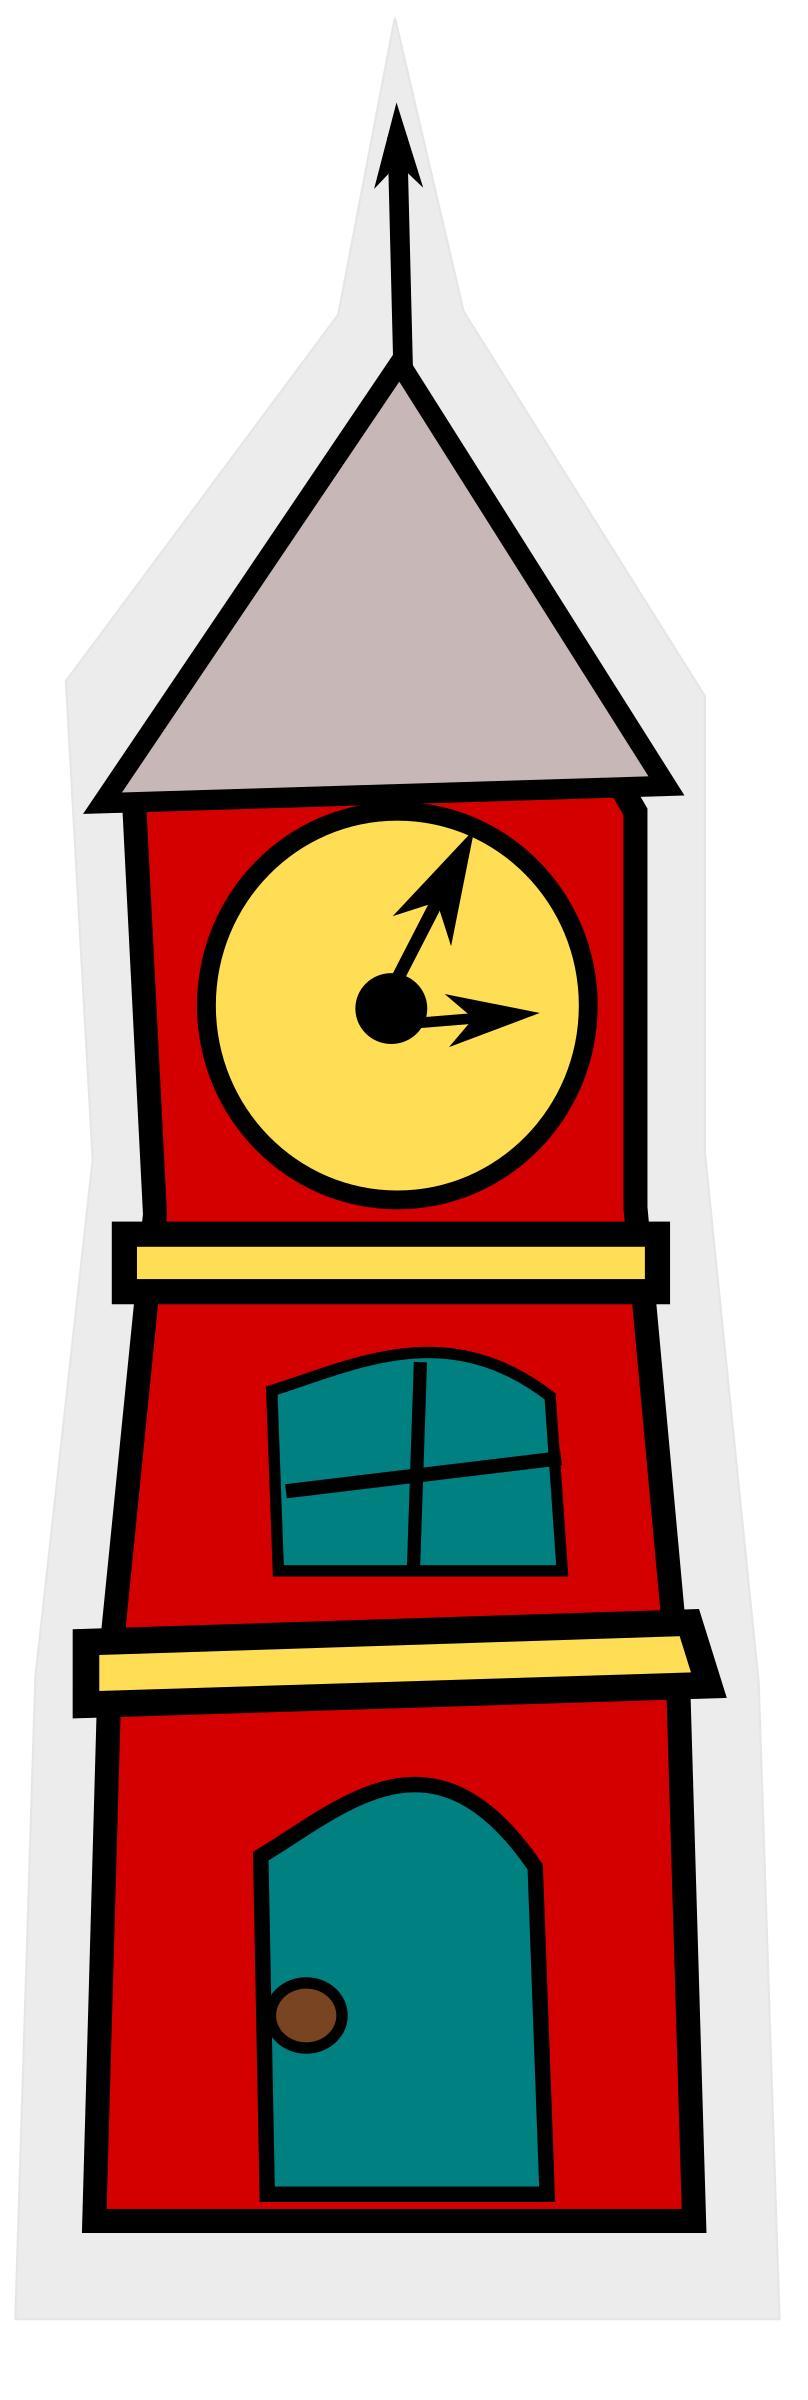 cartoon-tower with a clock png transparent